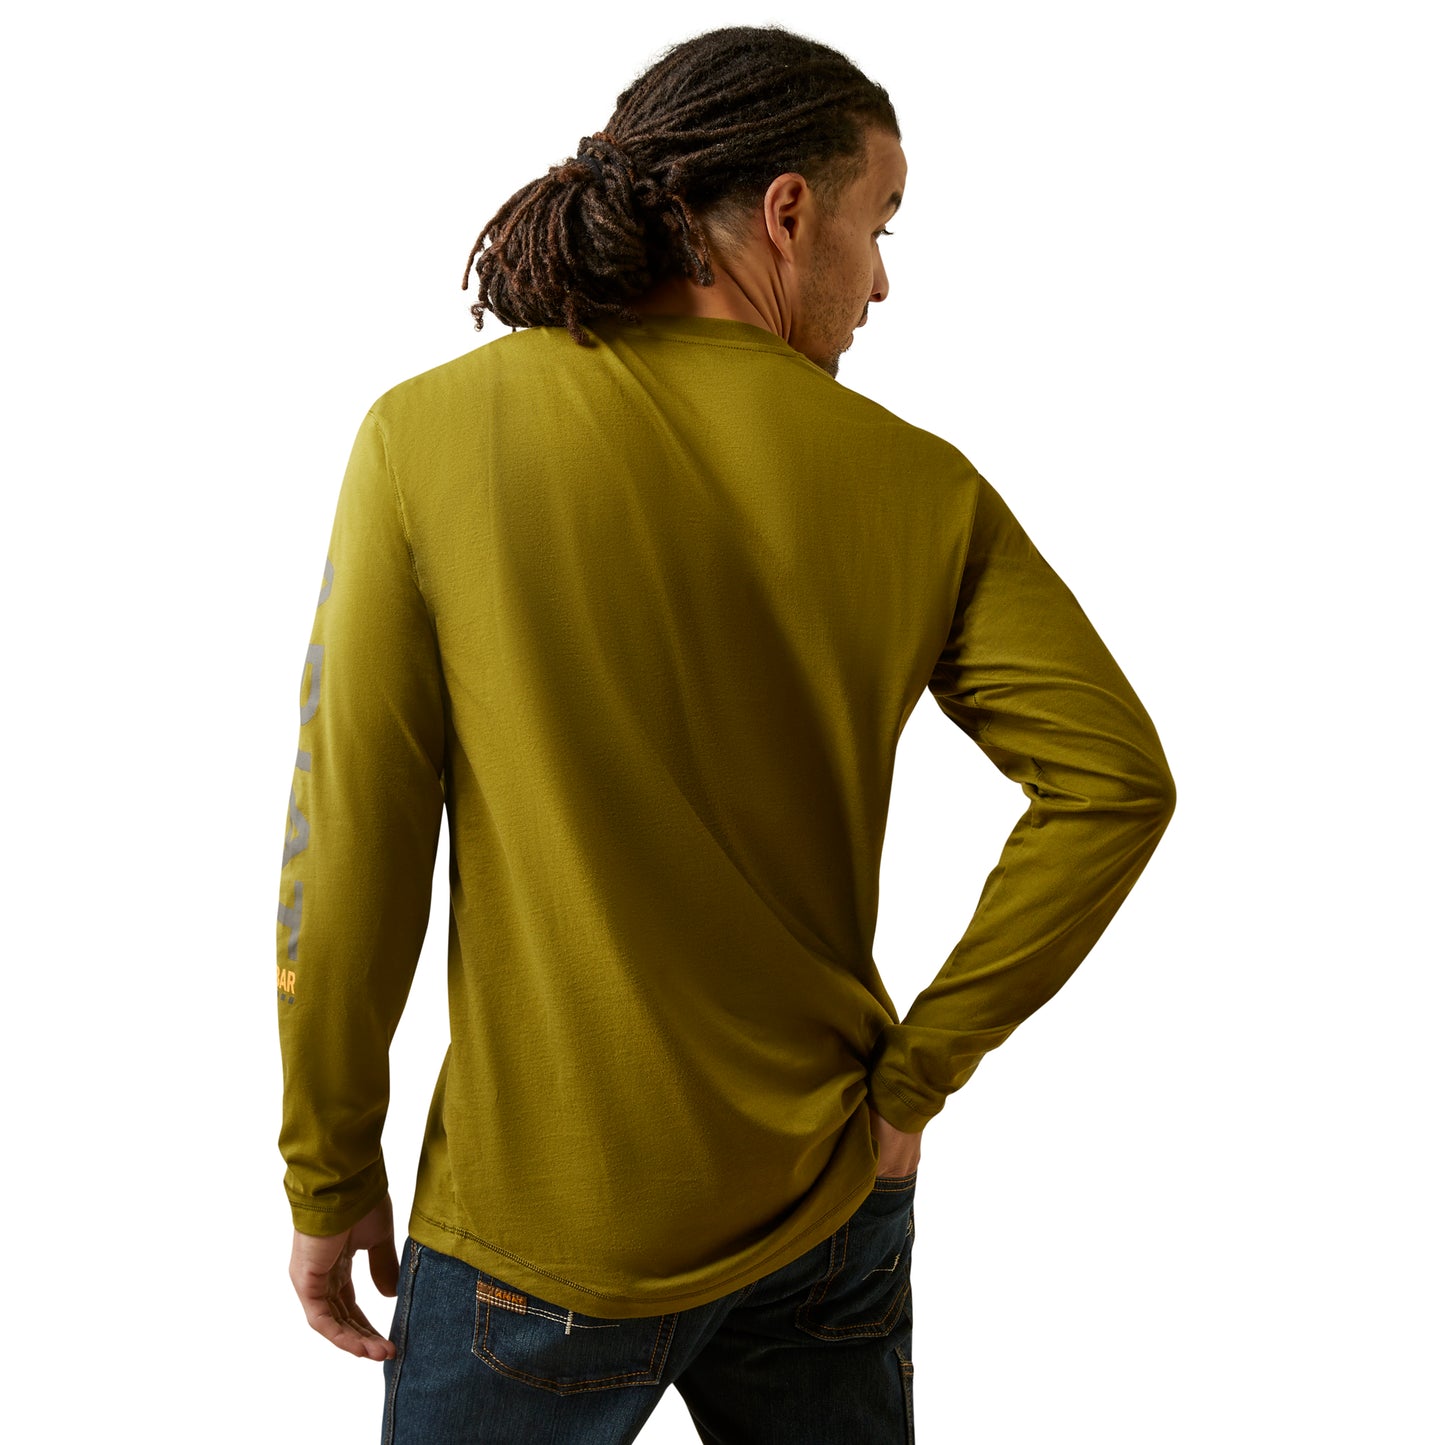 Ariat Men's Rebar Workman Logo Graphic Avocado Green T-Shirt 10046797